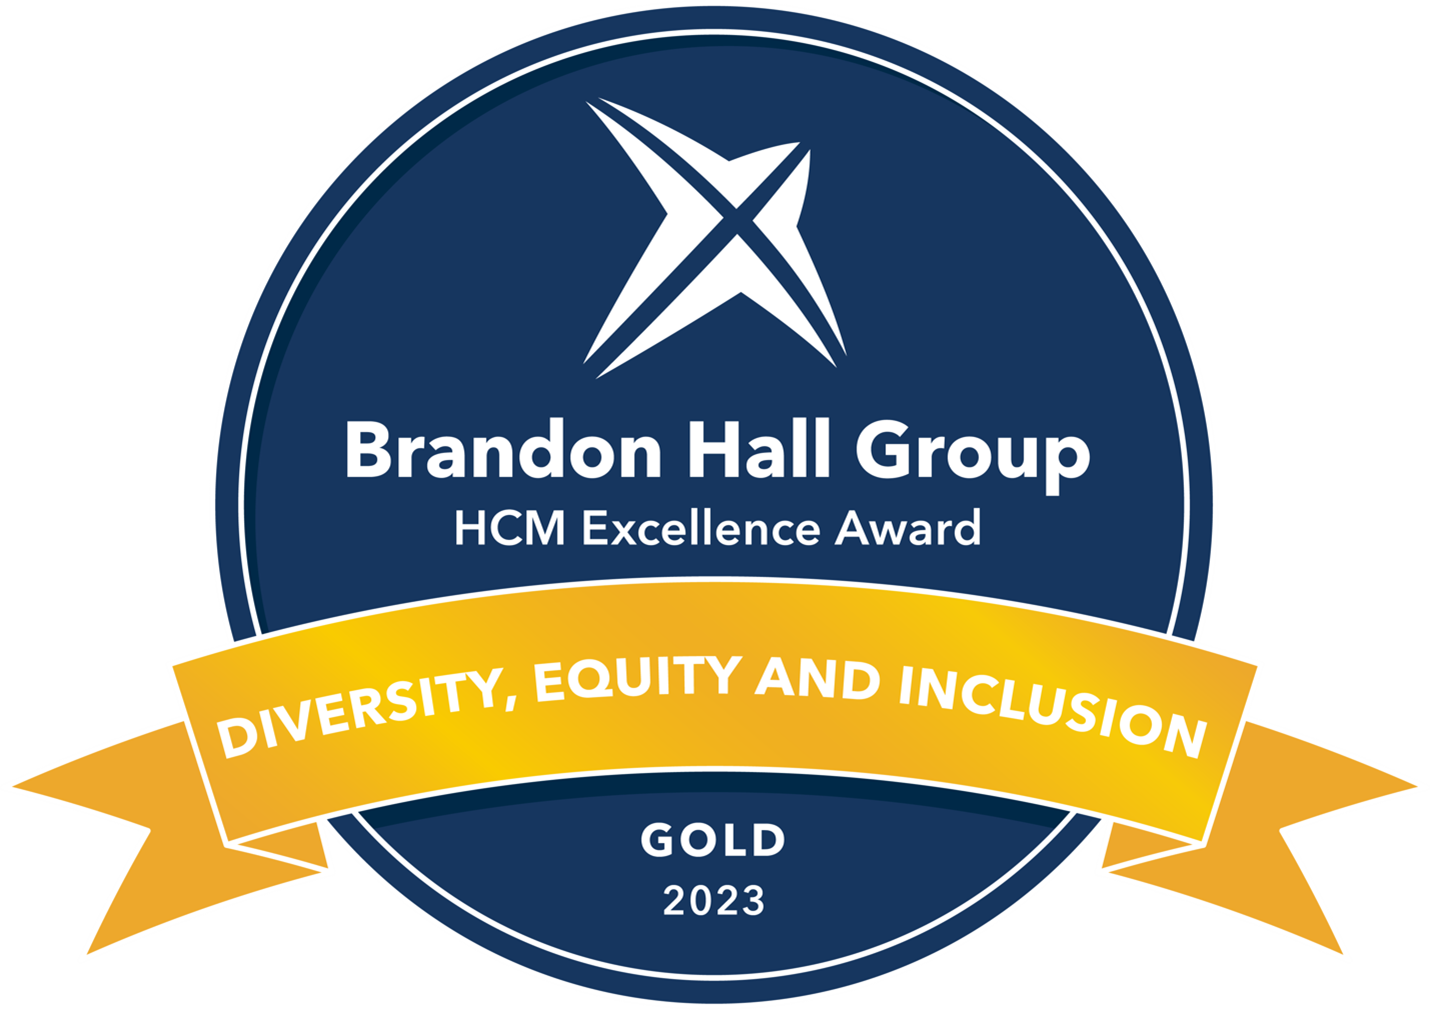 Emblem of the Brandon Hall Group Gold award